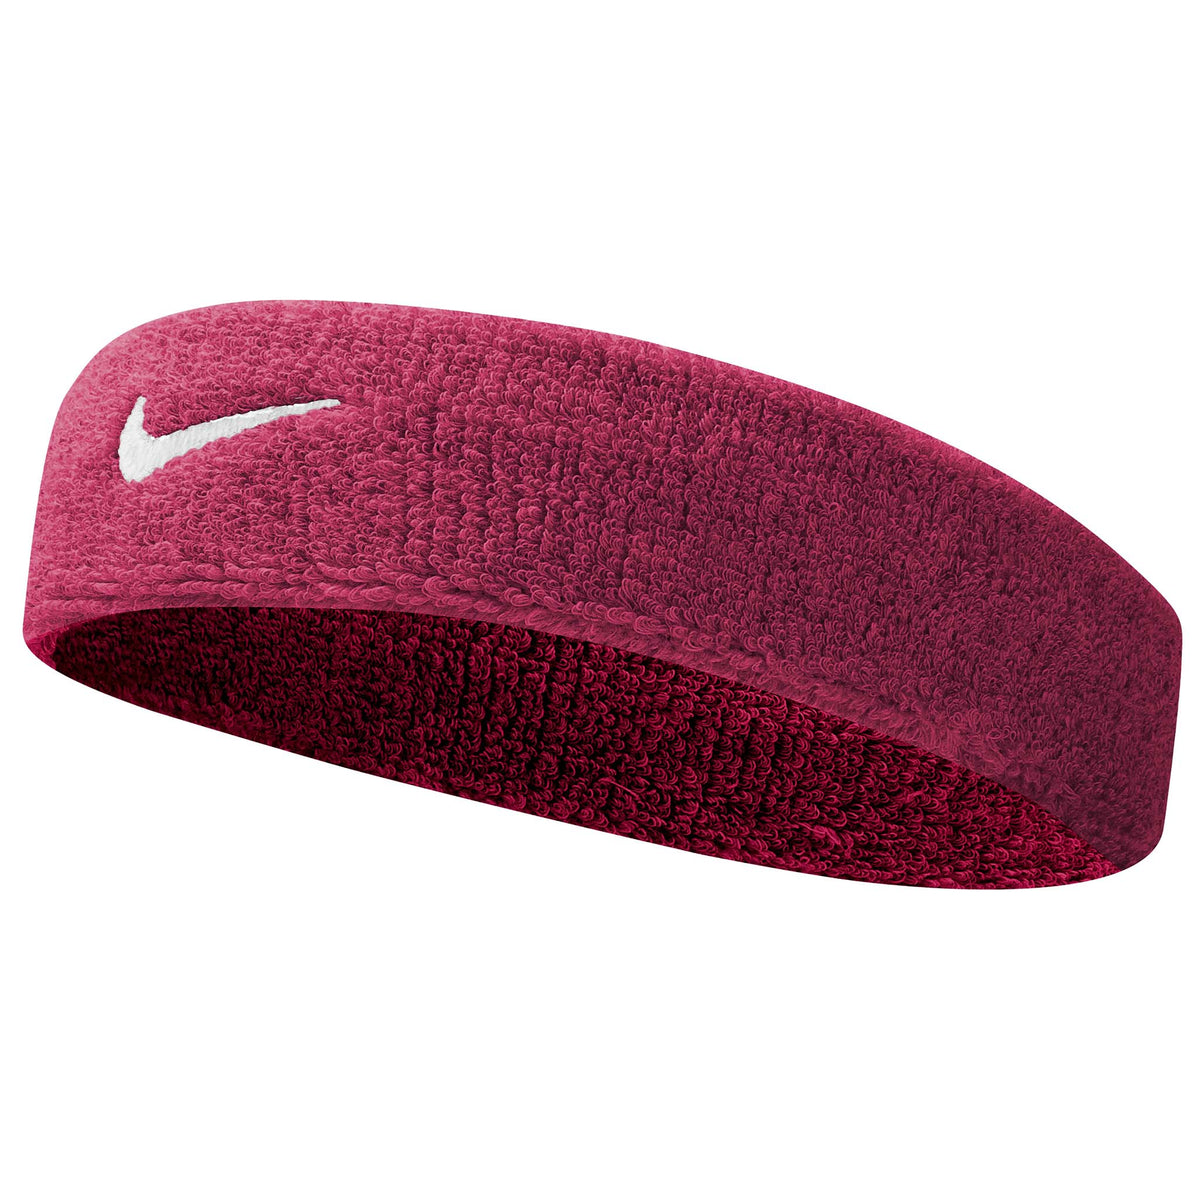 Nike Swoosh bandeaux sport vivid pink white